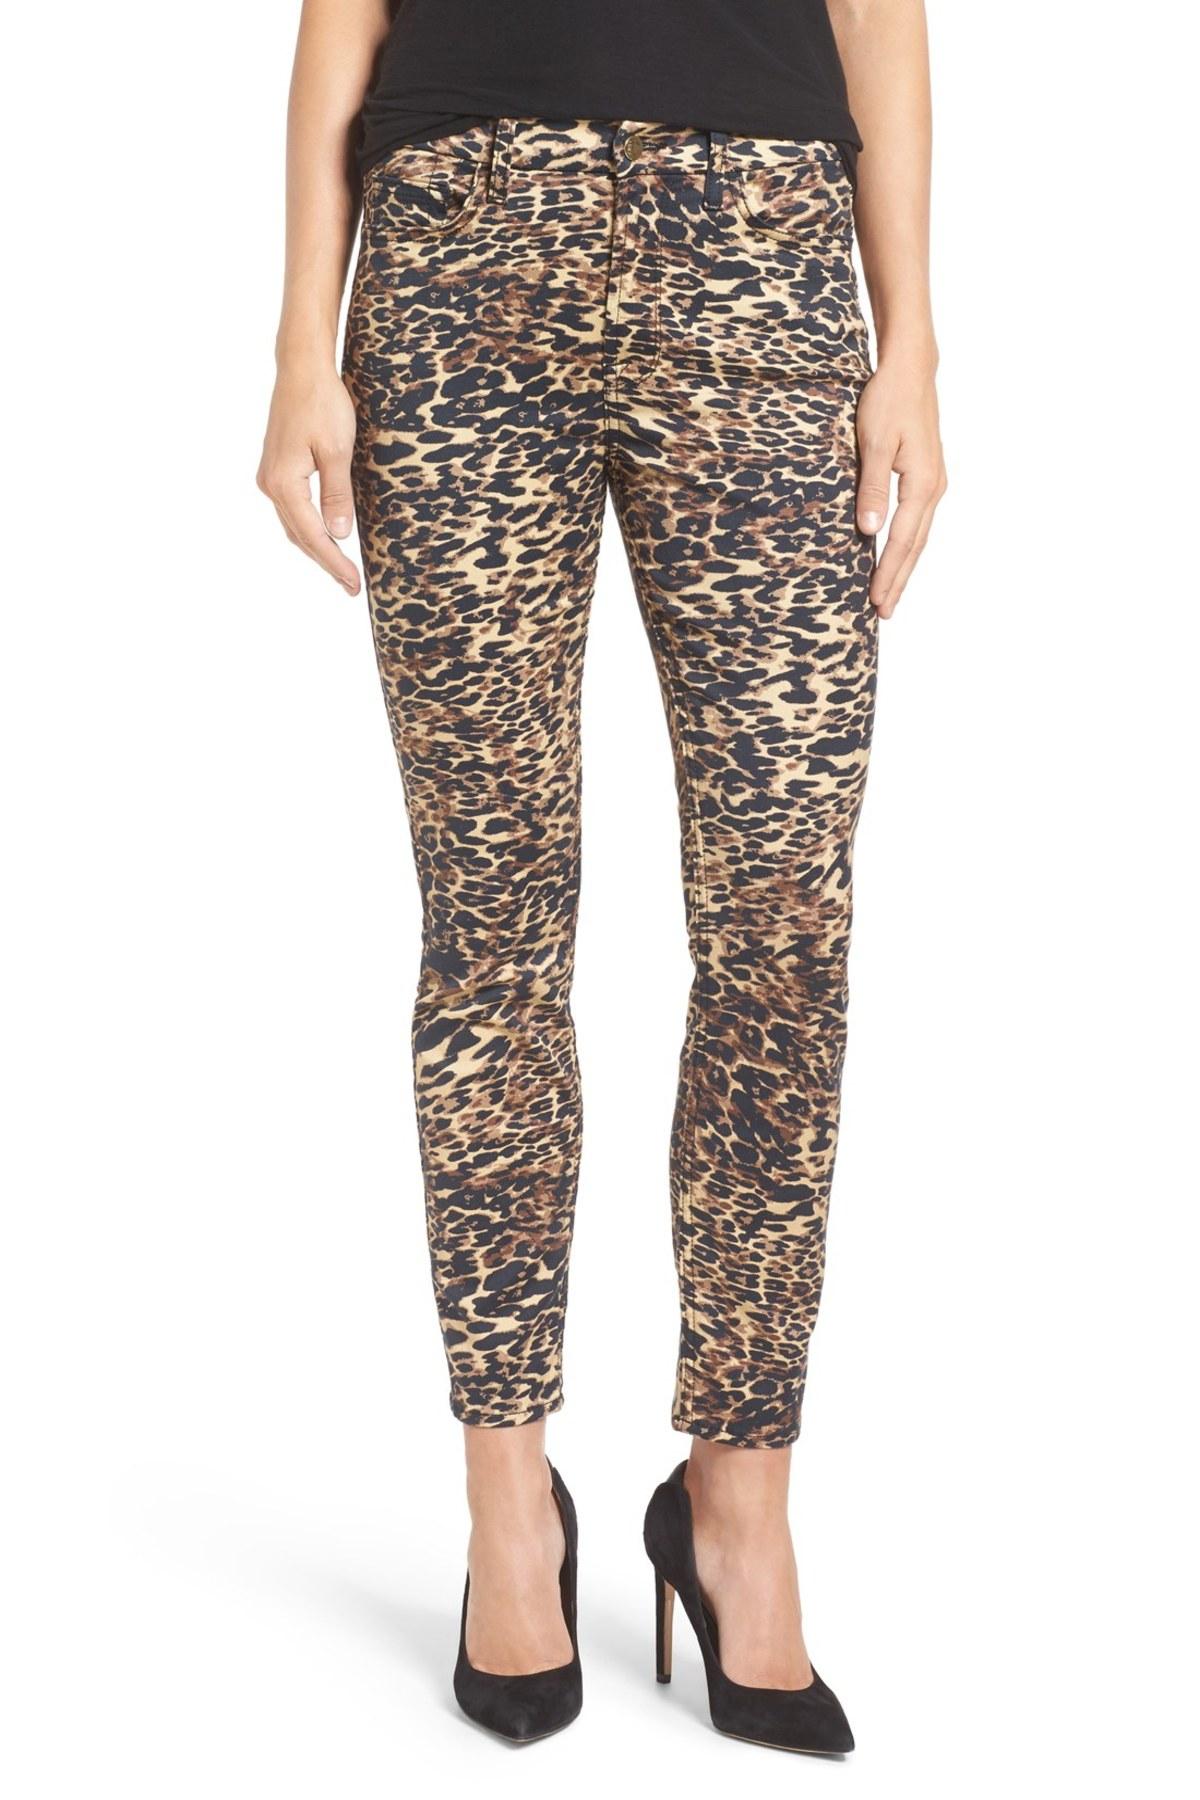 Lyst - Jen7 Leopard Print Stretch Ankle Skinny Jeans